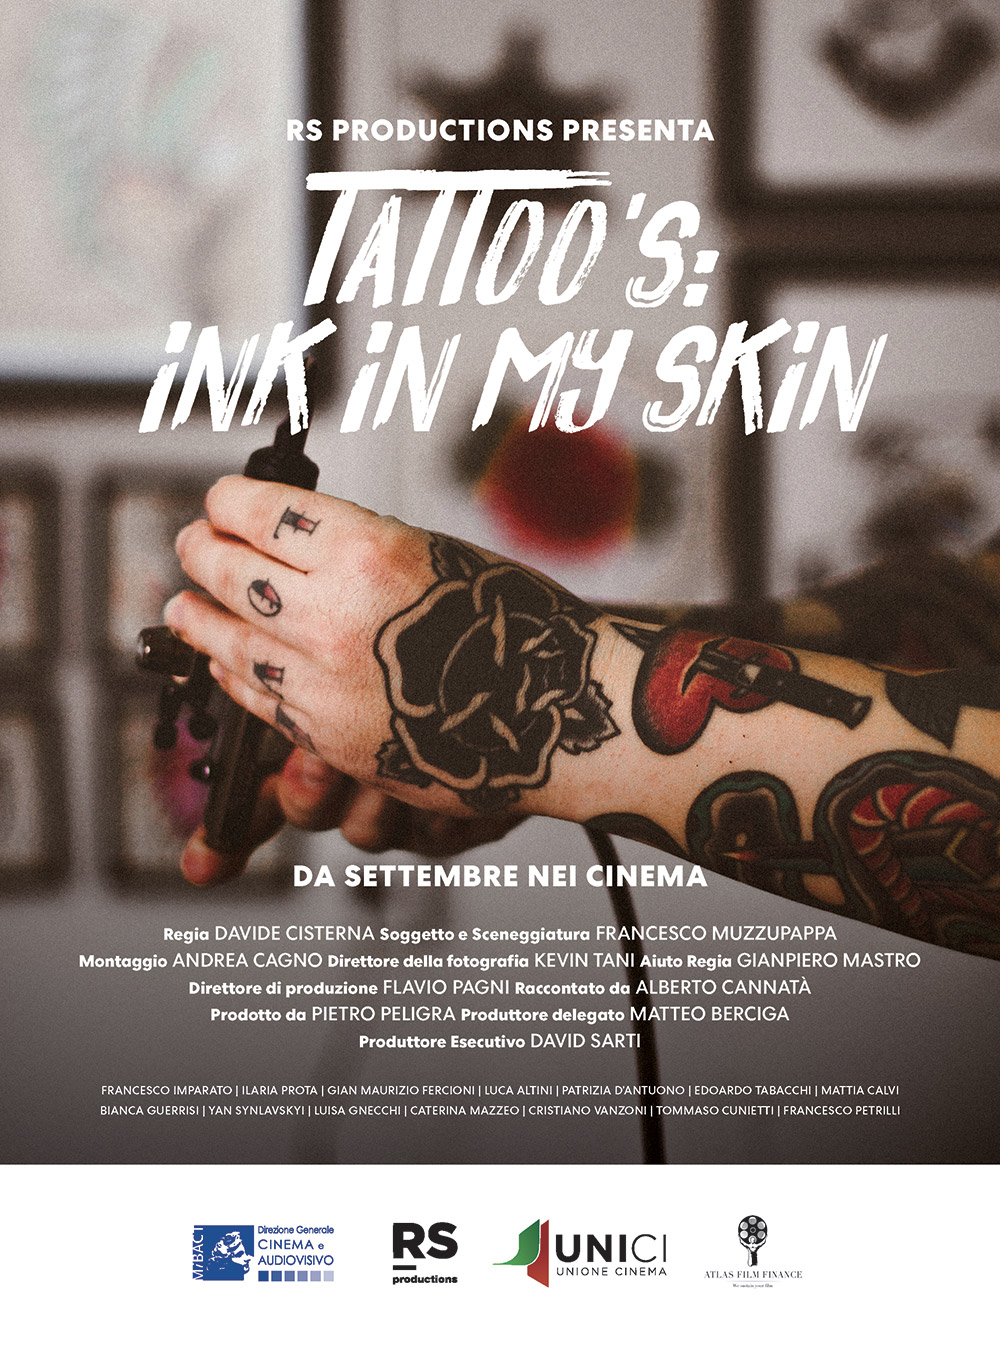 Tattoo's ink in my skin